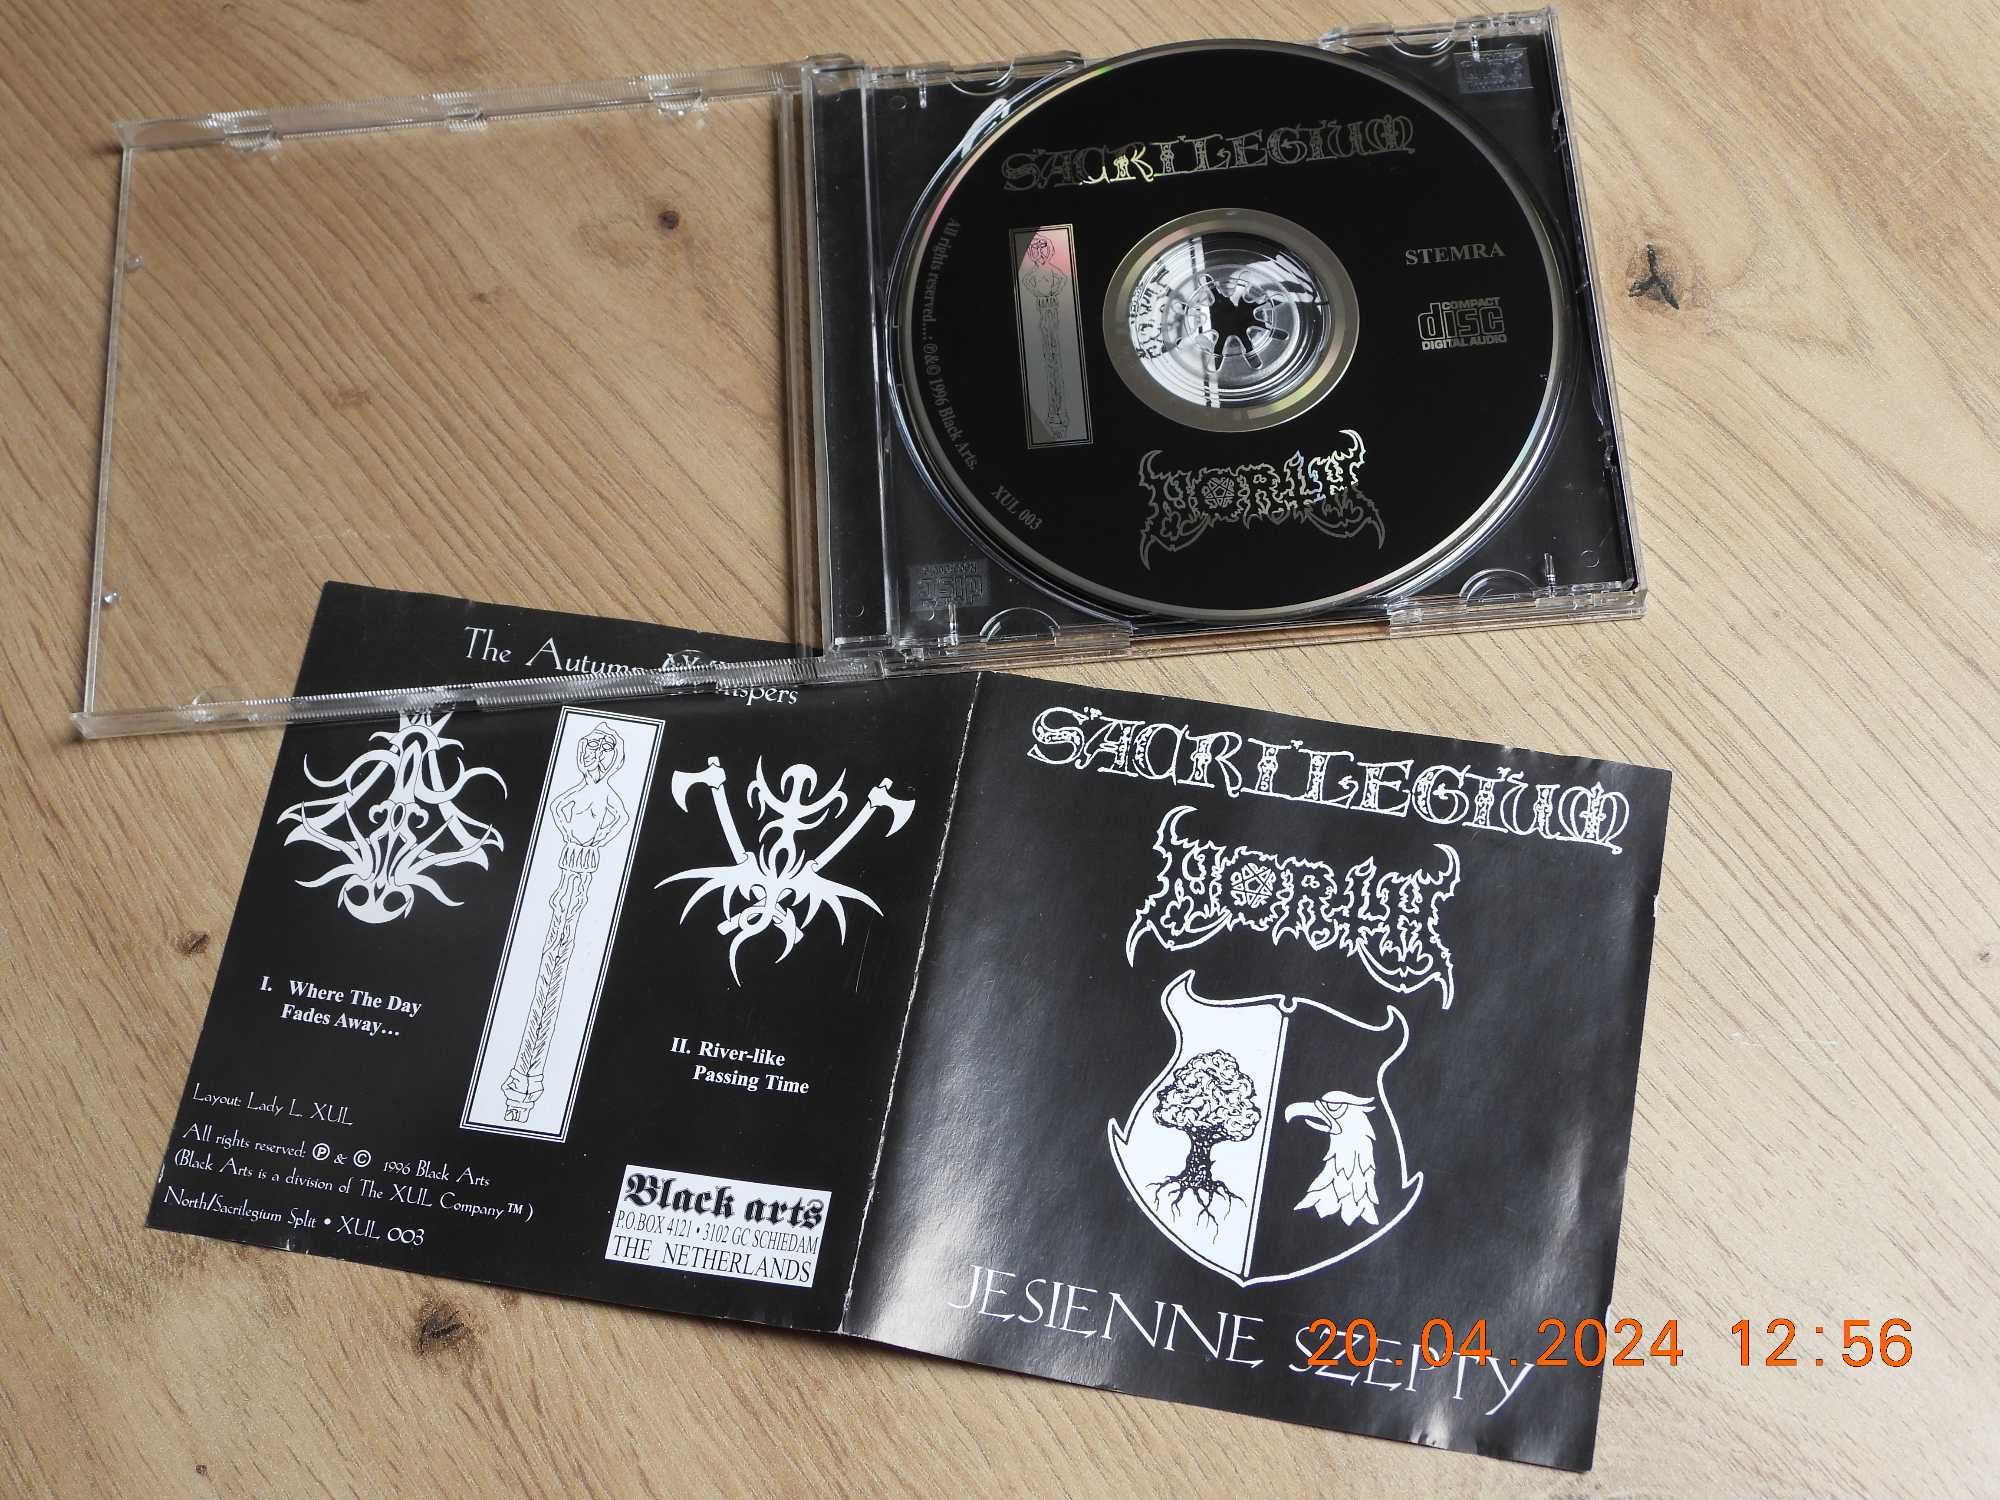 SACRILEGIUM/NORTH - Jesienne Szepty (1996)  - CD